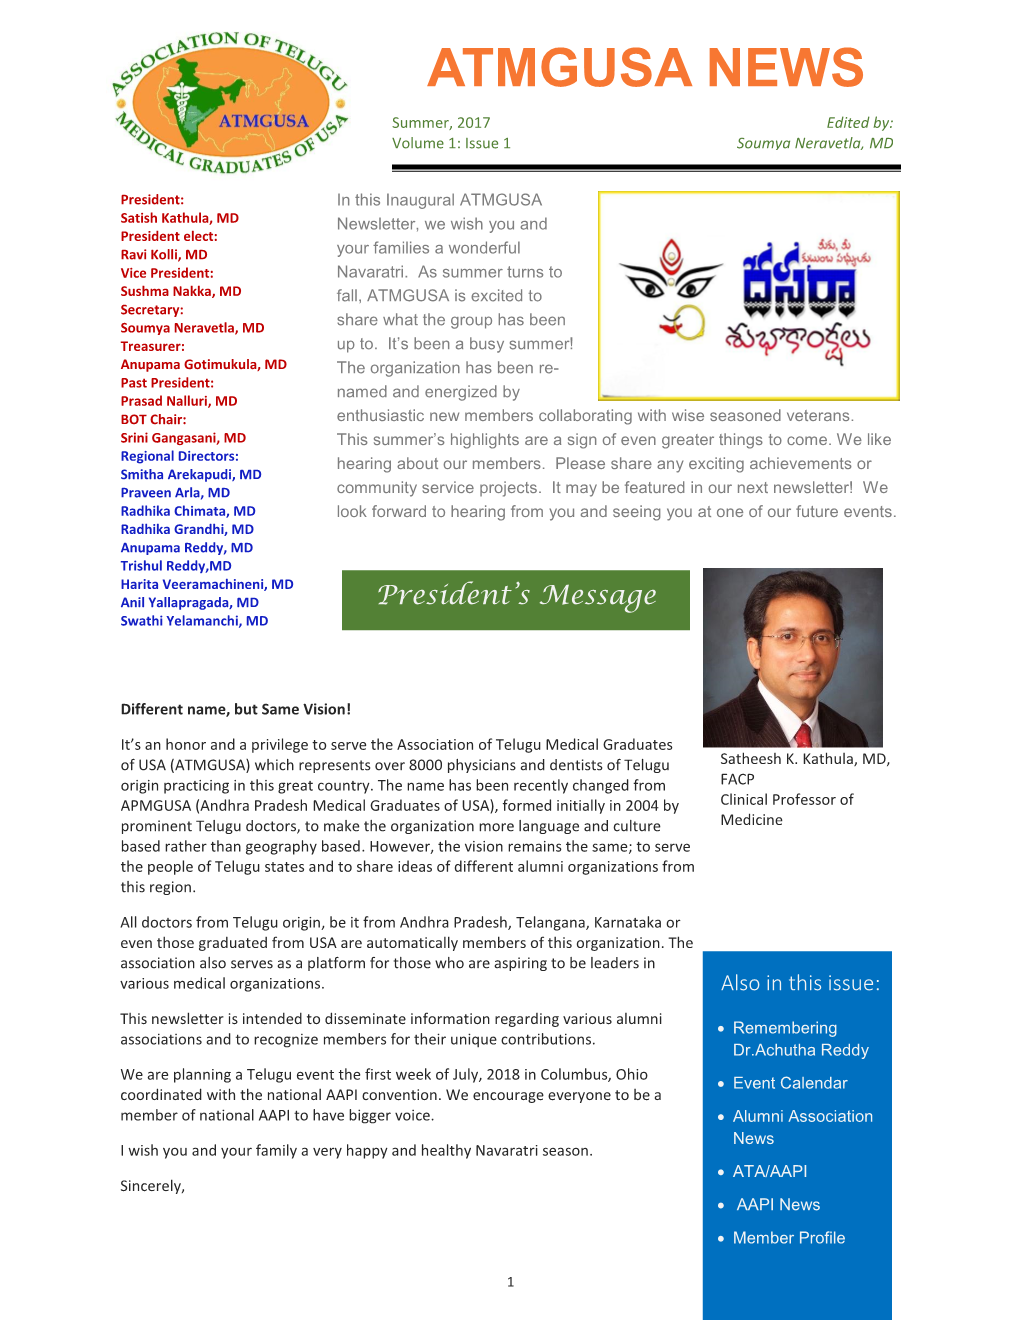 Alumni Association News I Wish You and Your Family a Very Happy and Healthy Navaratri Season